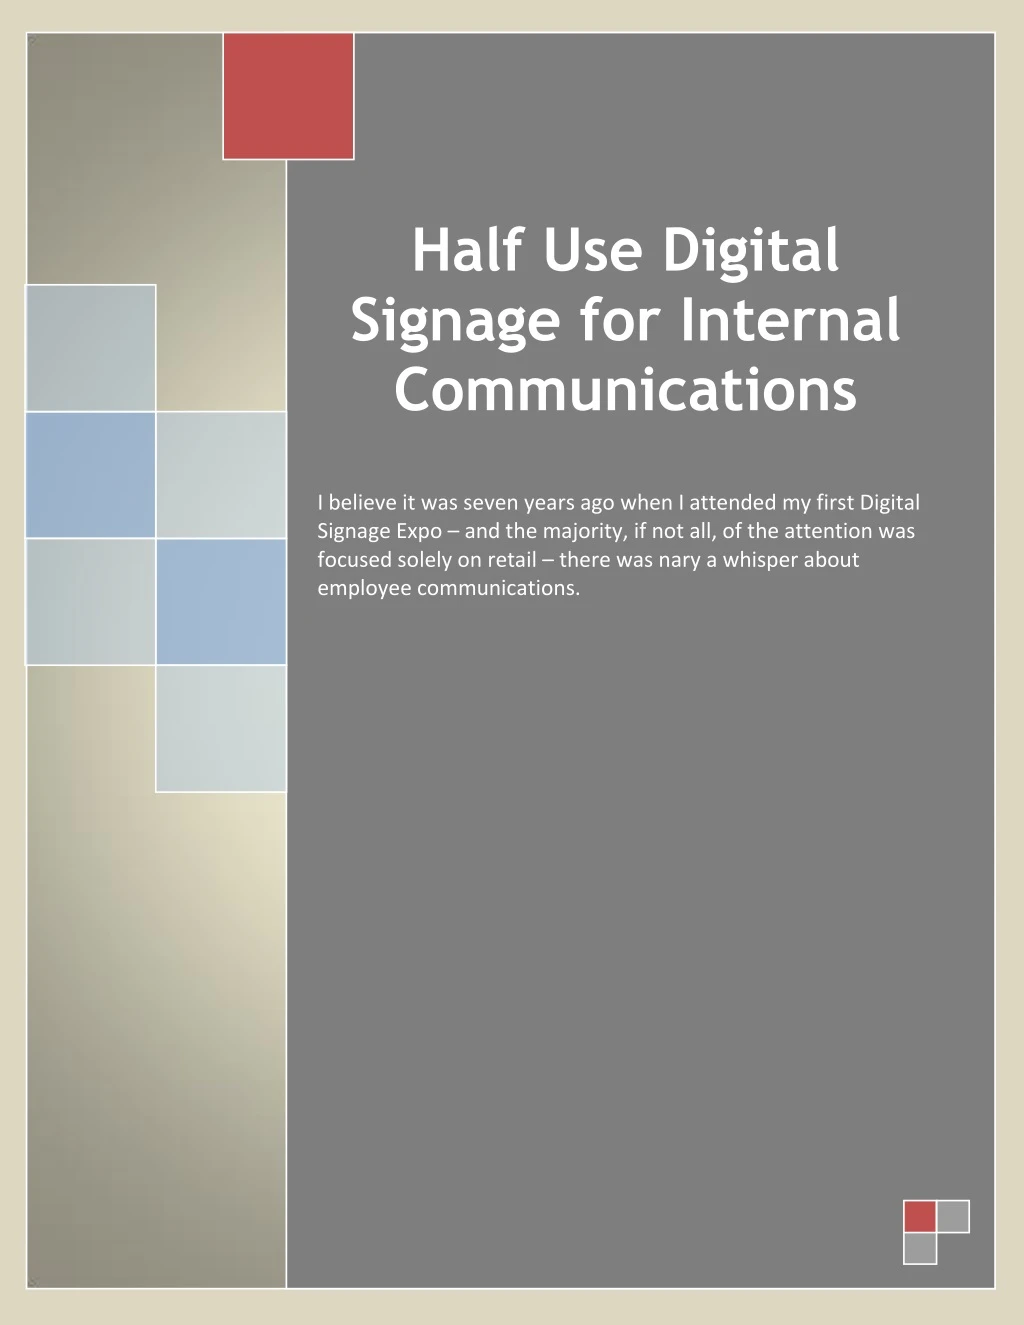 half use digital signage for internal